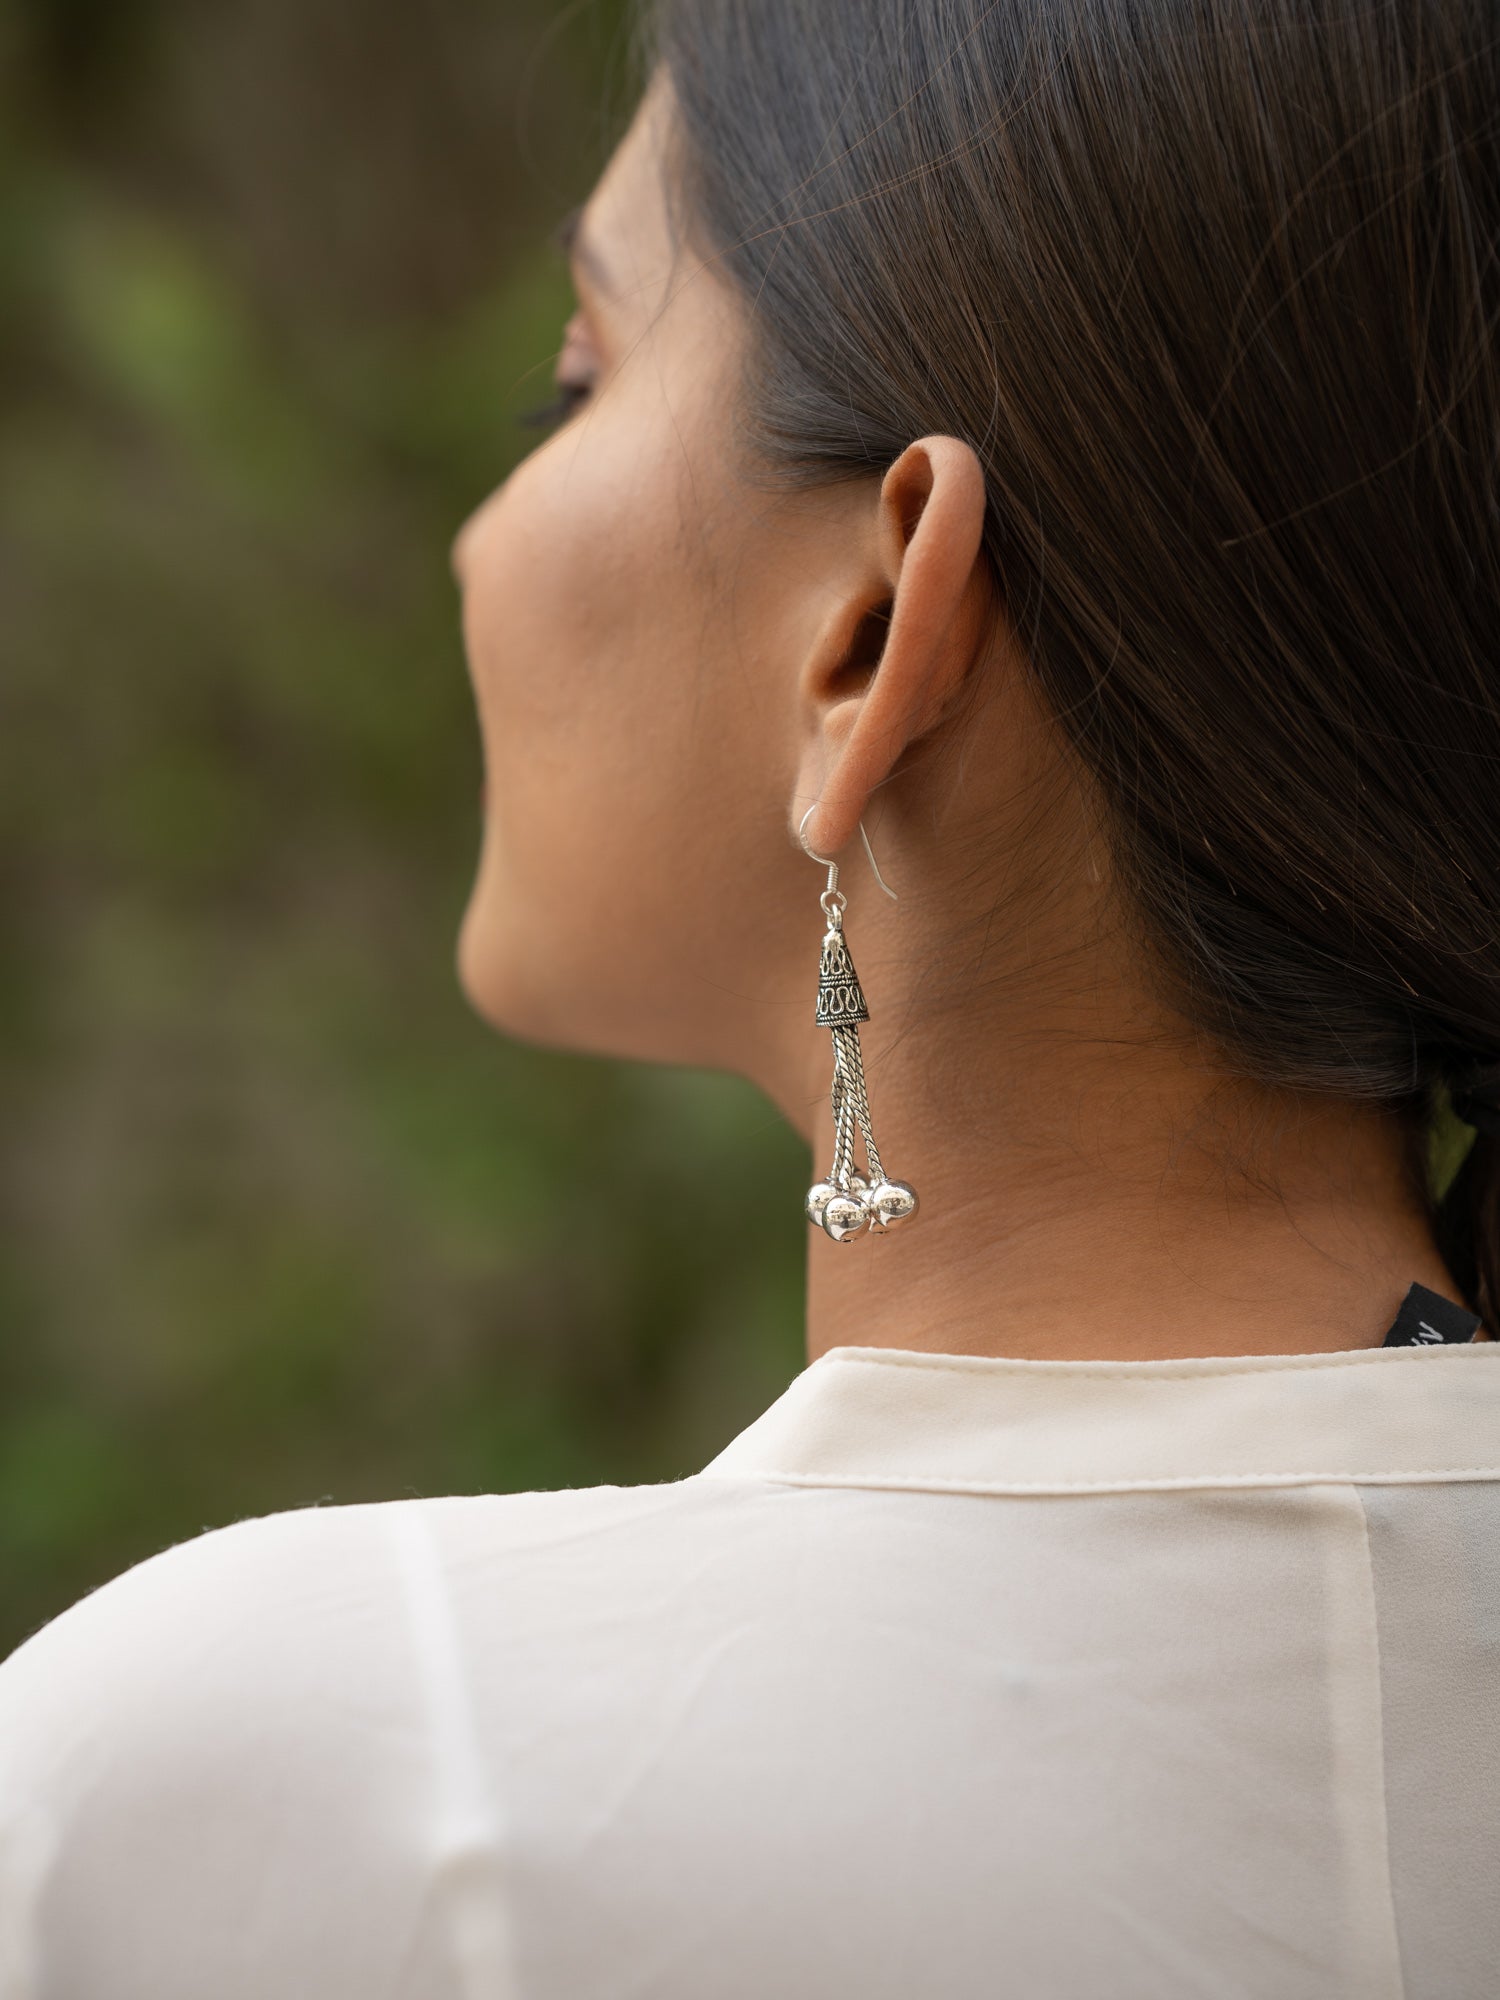 Earrings Designs | इयररिंग्स के नए डिजाइन | Farewell Ke Naye Designs |  earrings designs for farewell party | HerZindagi